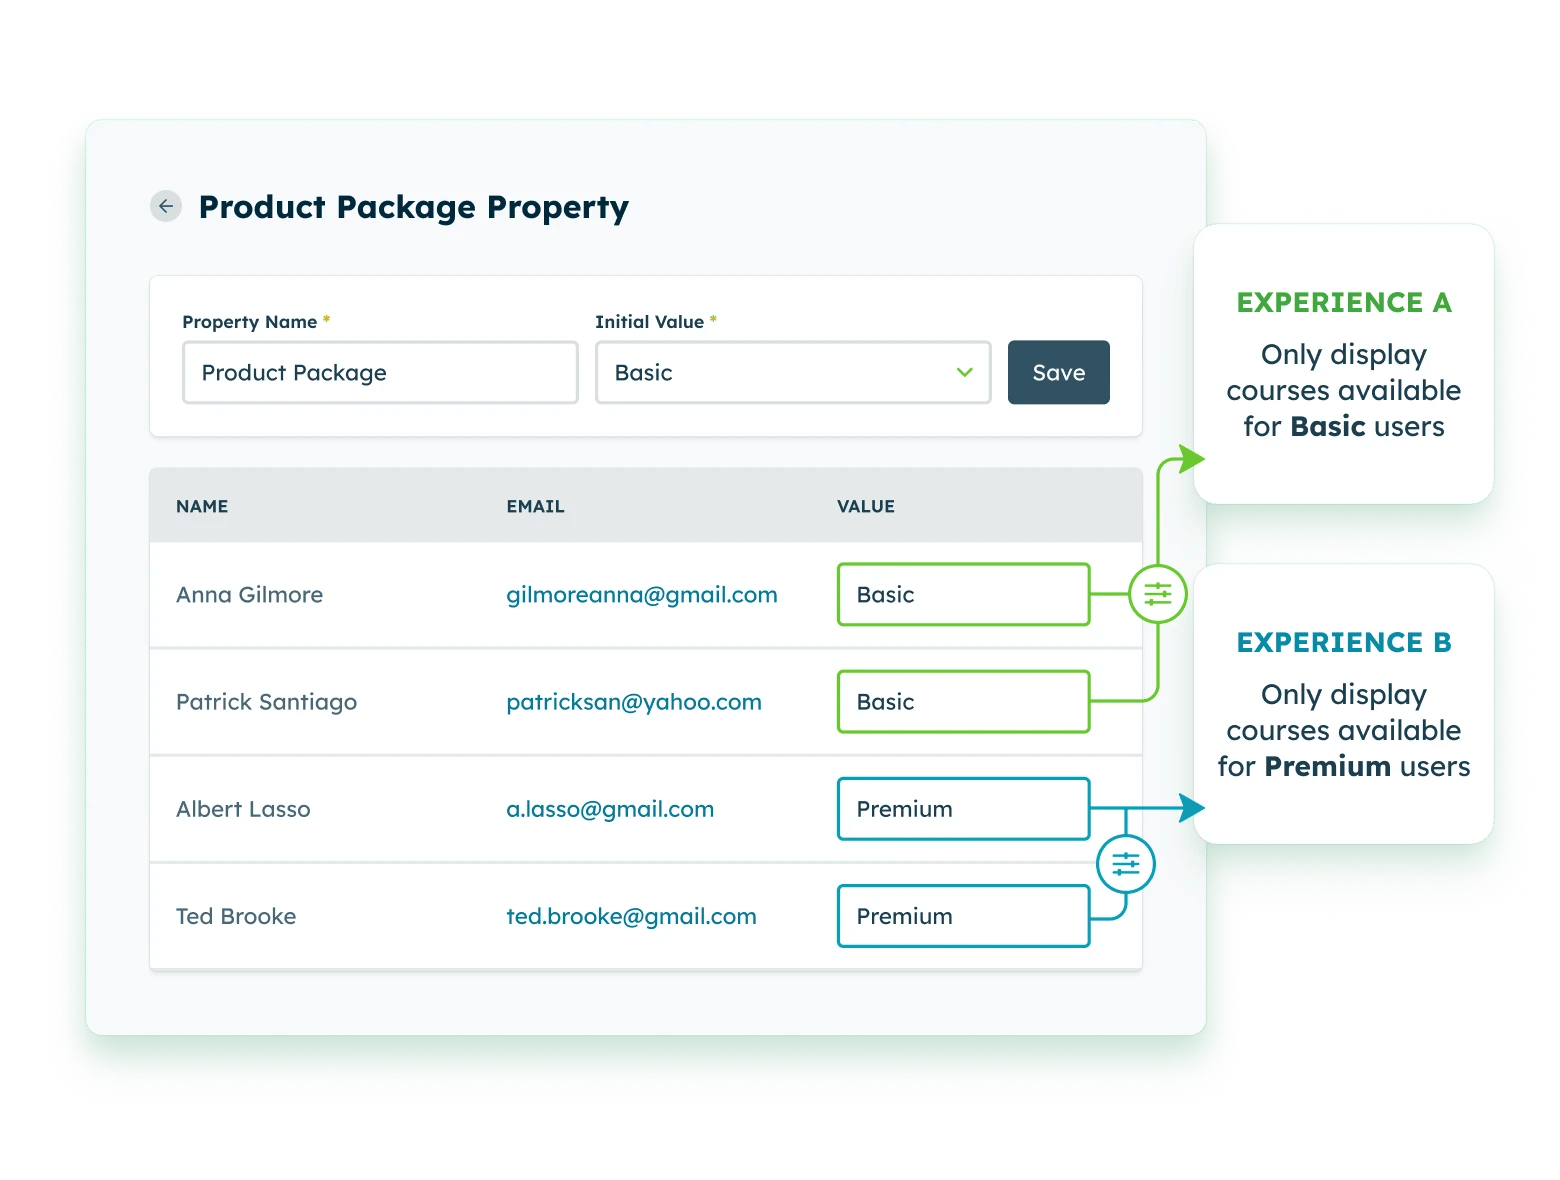 np_personalization_properties_product